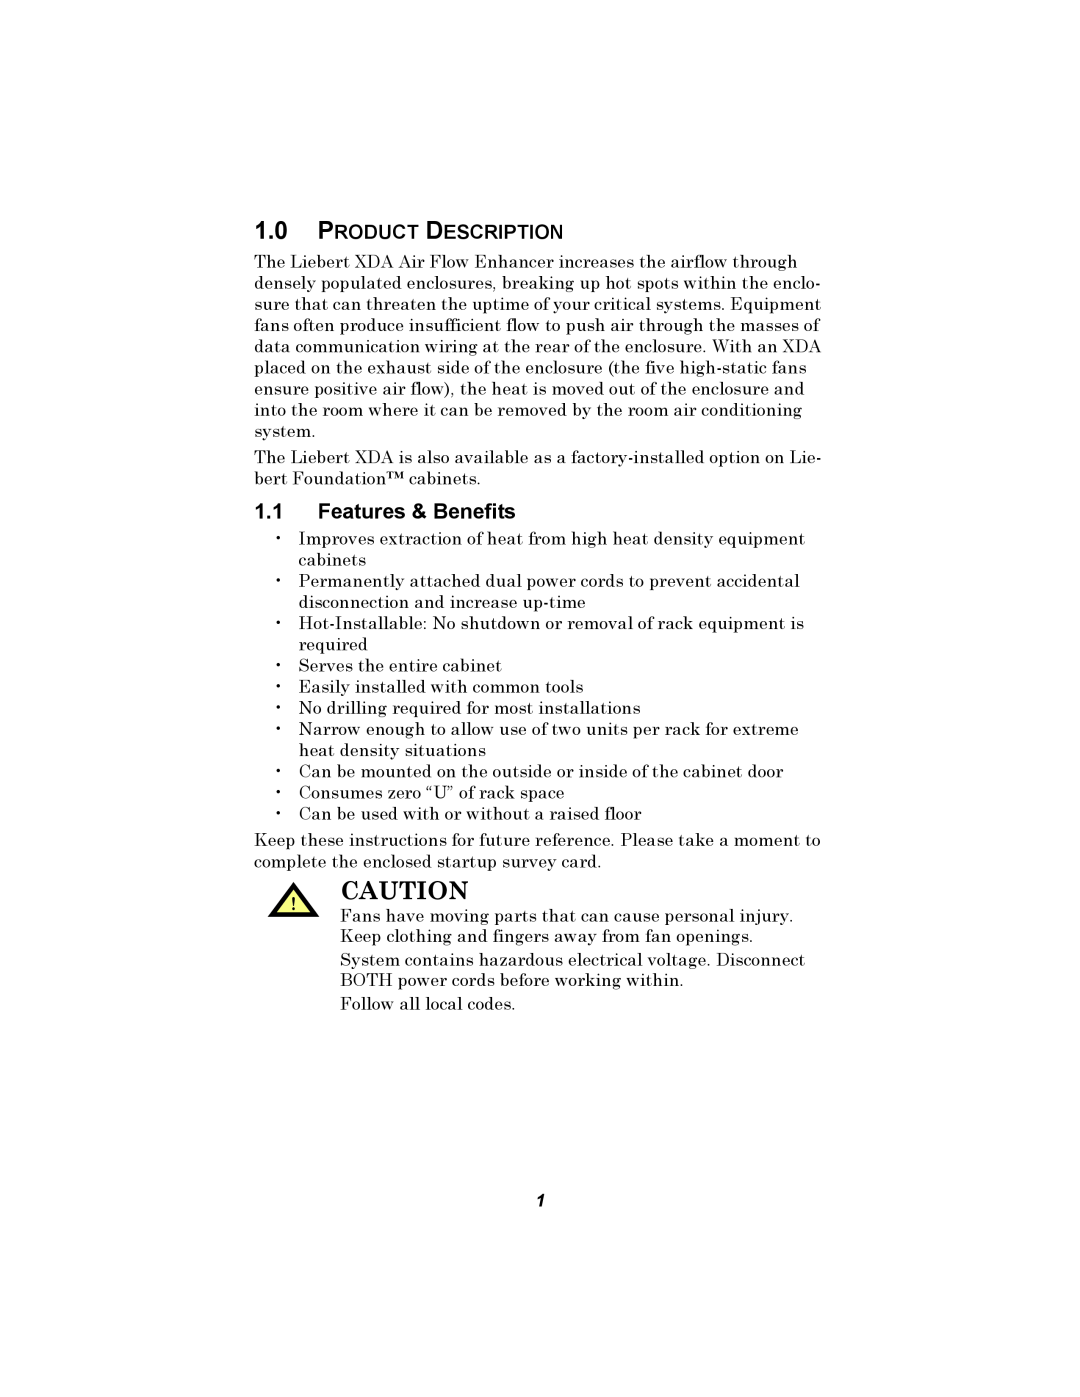 Liebert XDA user manual Features & Benefits, Product Description 